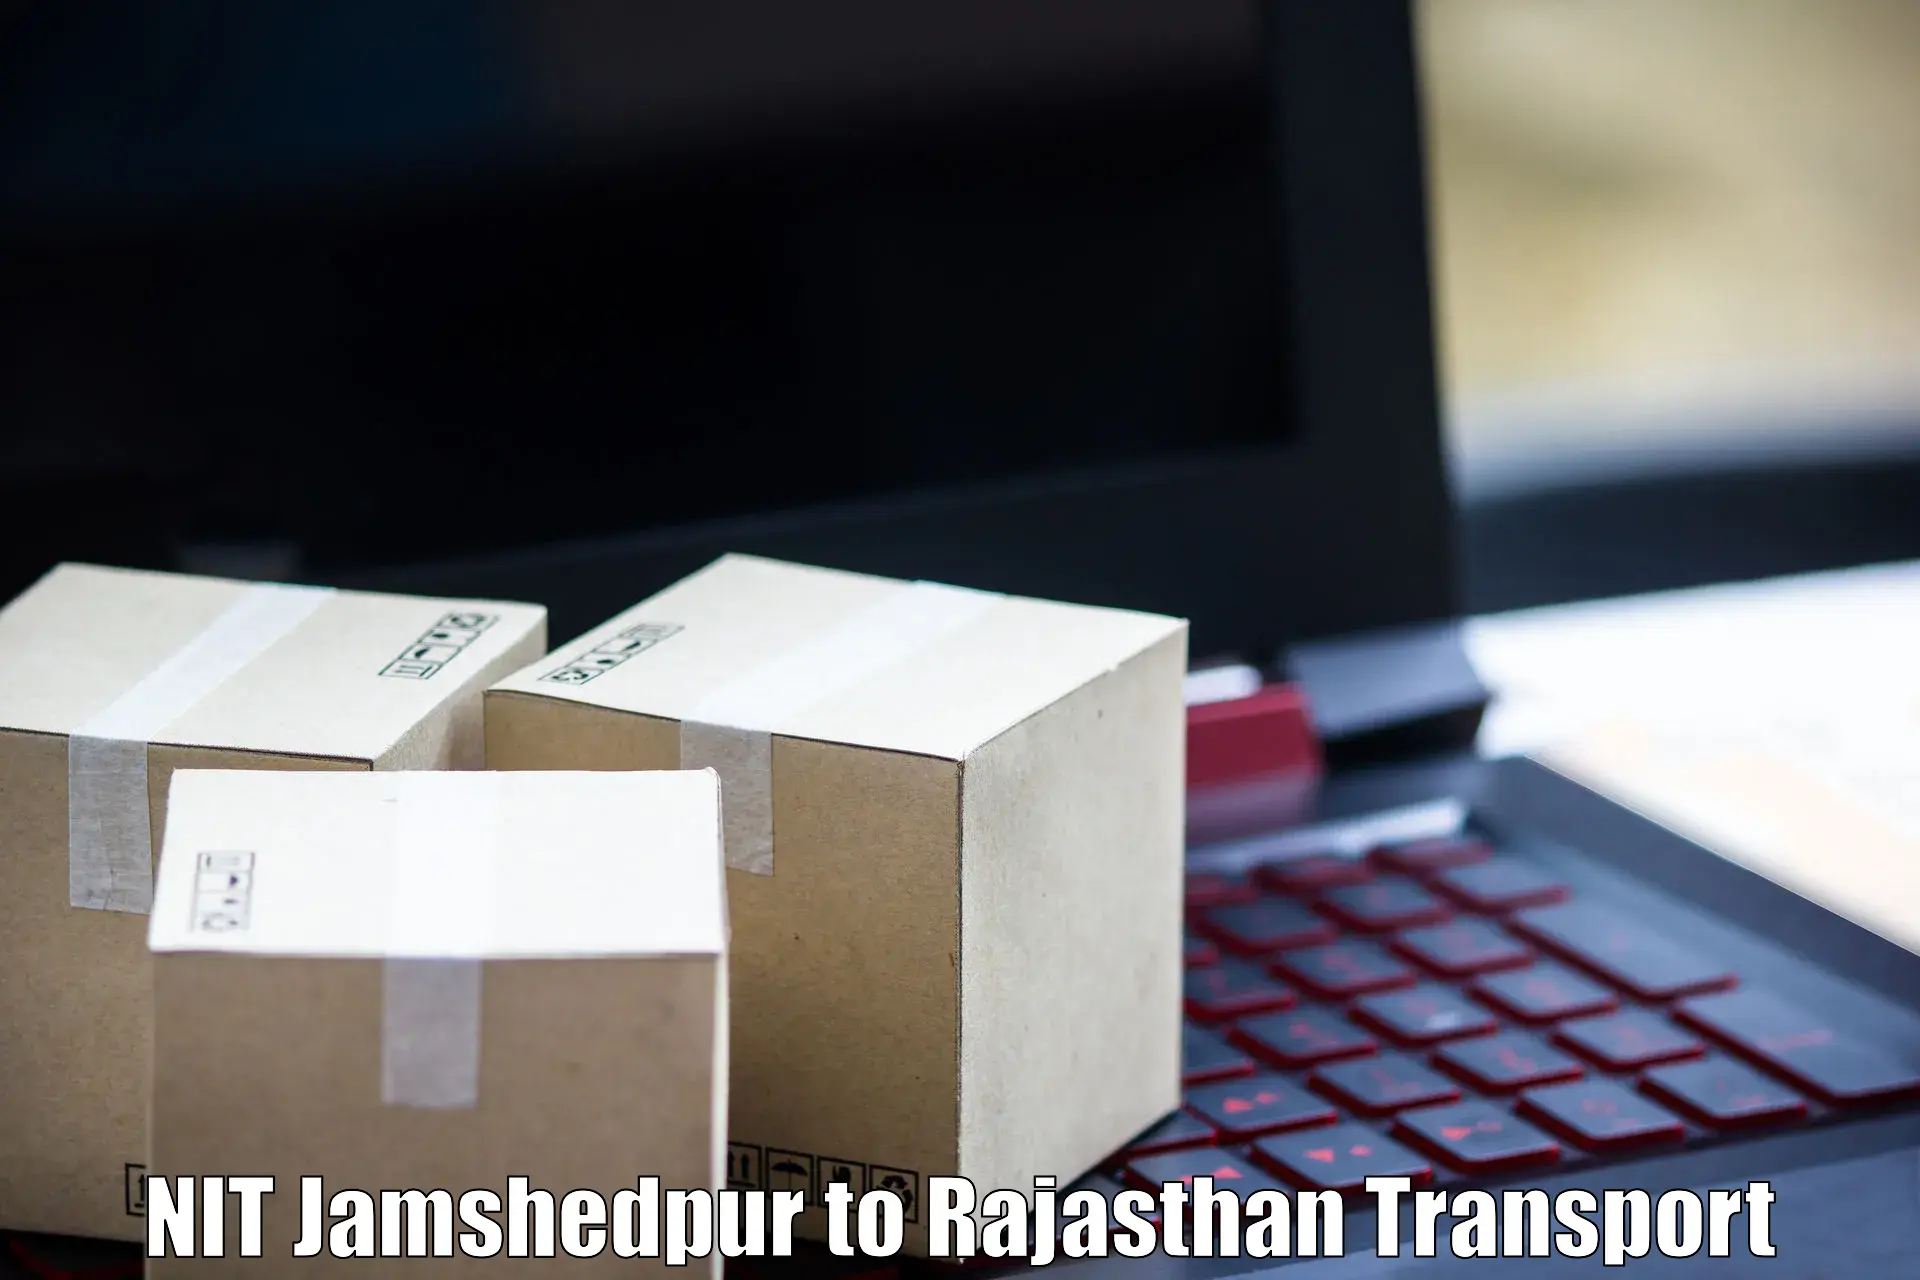 Daily transport service NIT Jamshedpur to Jaipur